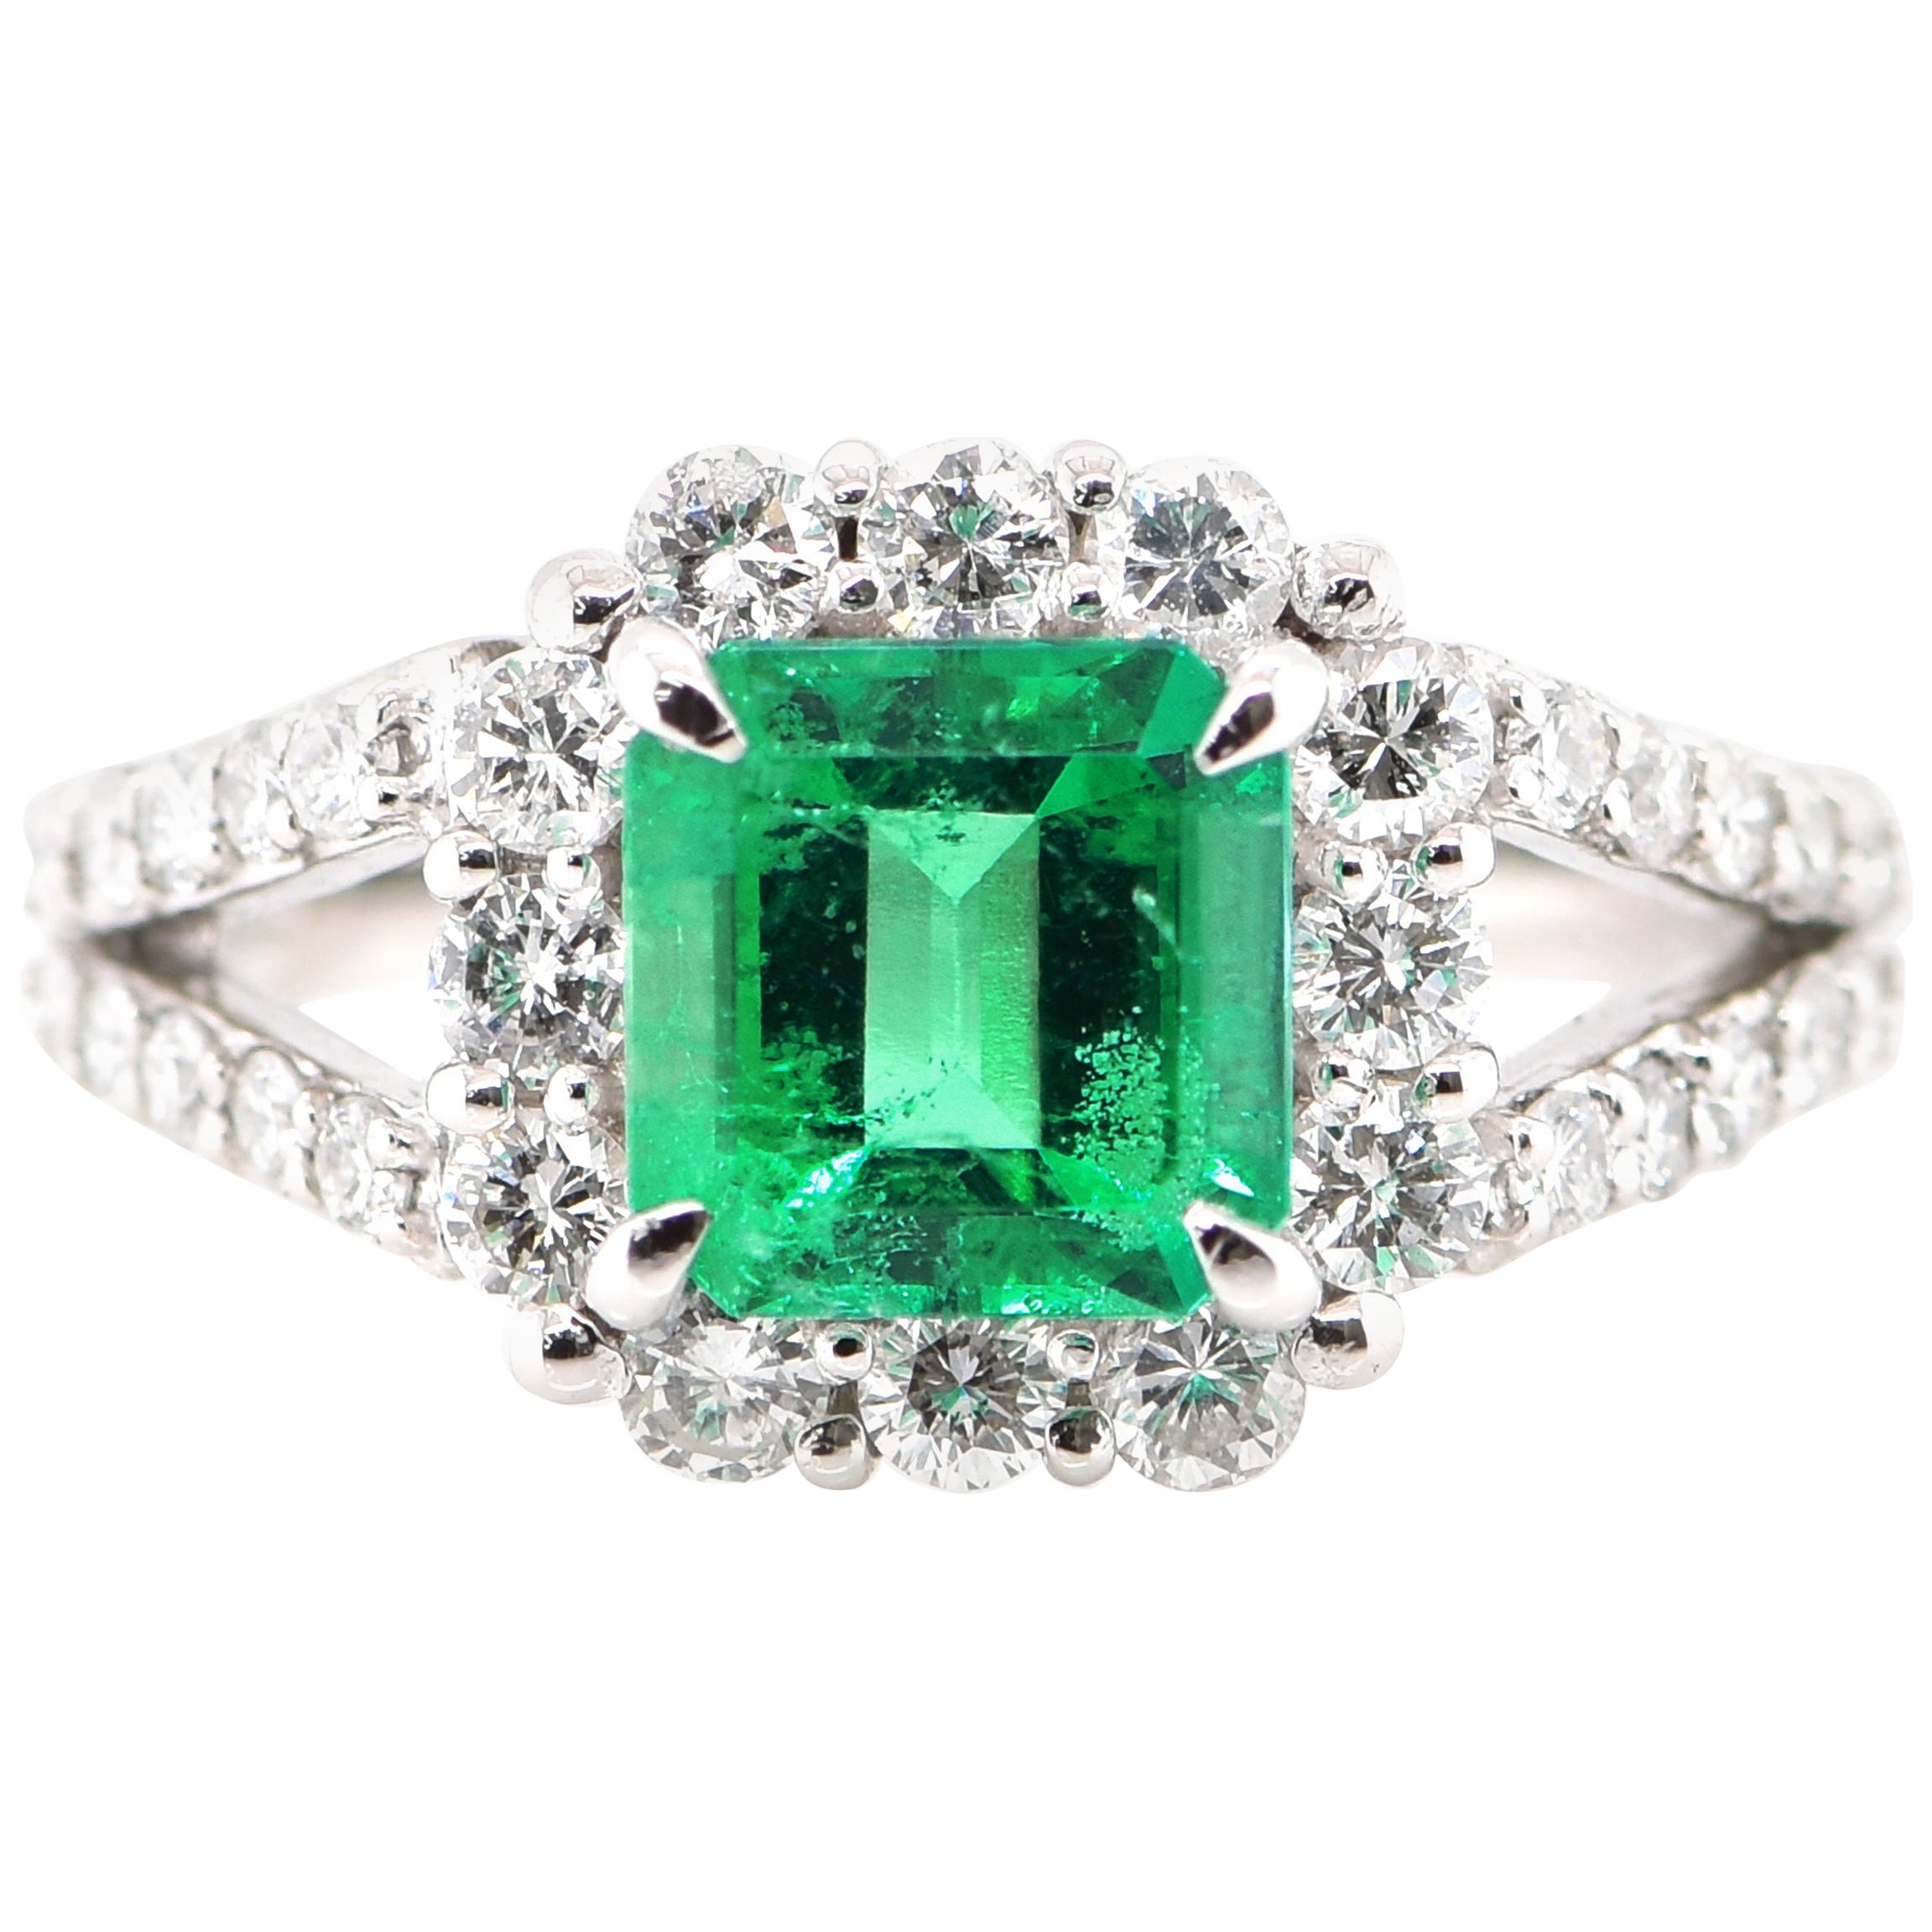 1.546 Carat Natural Emerald and Diamond Ring Set in Platinum